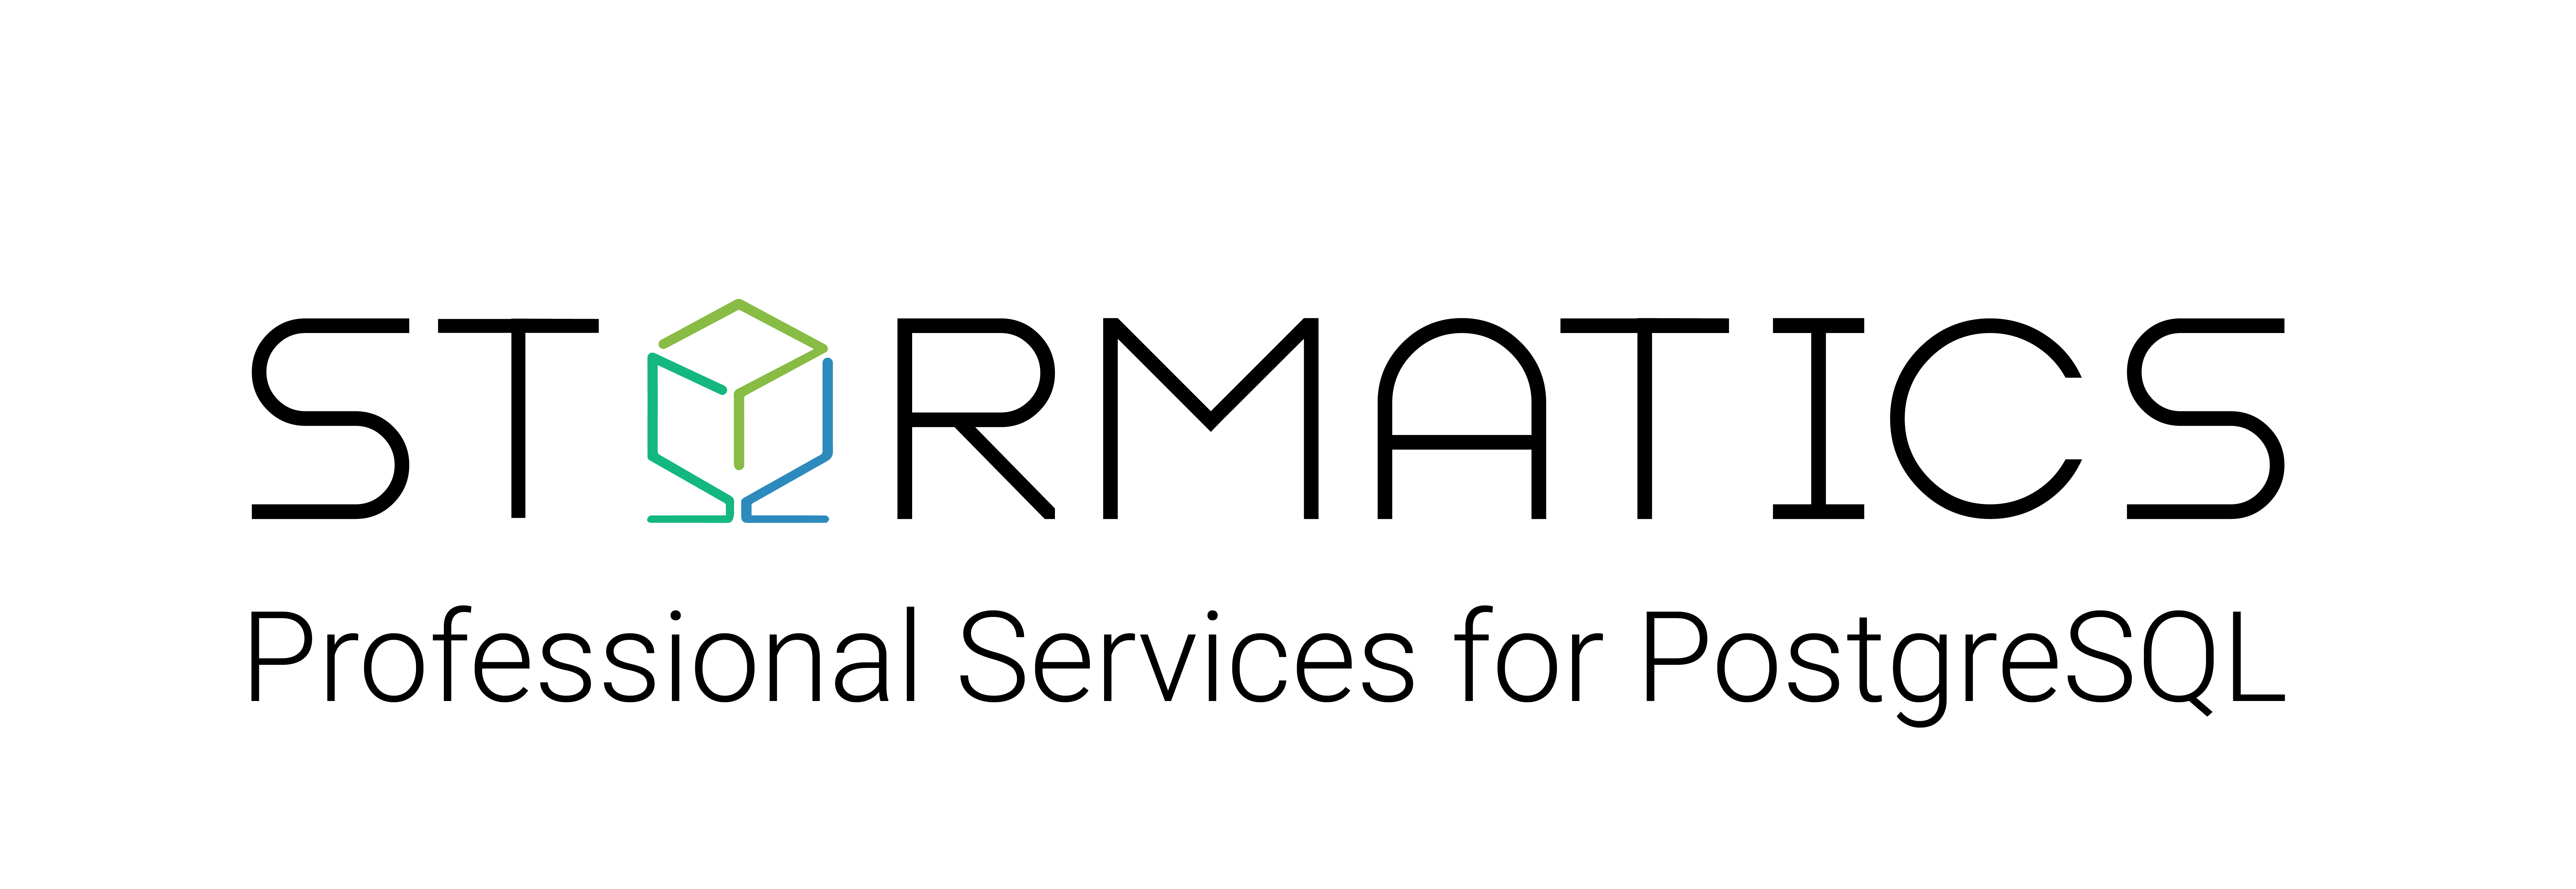 Stormatics Logo